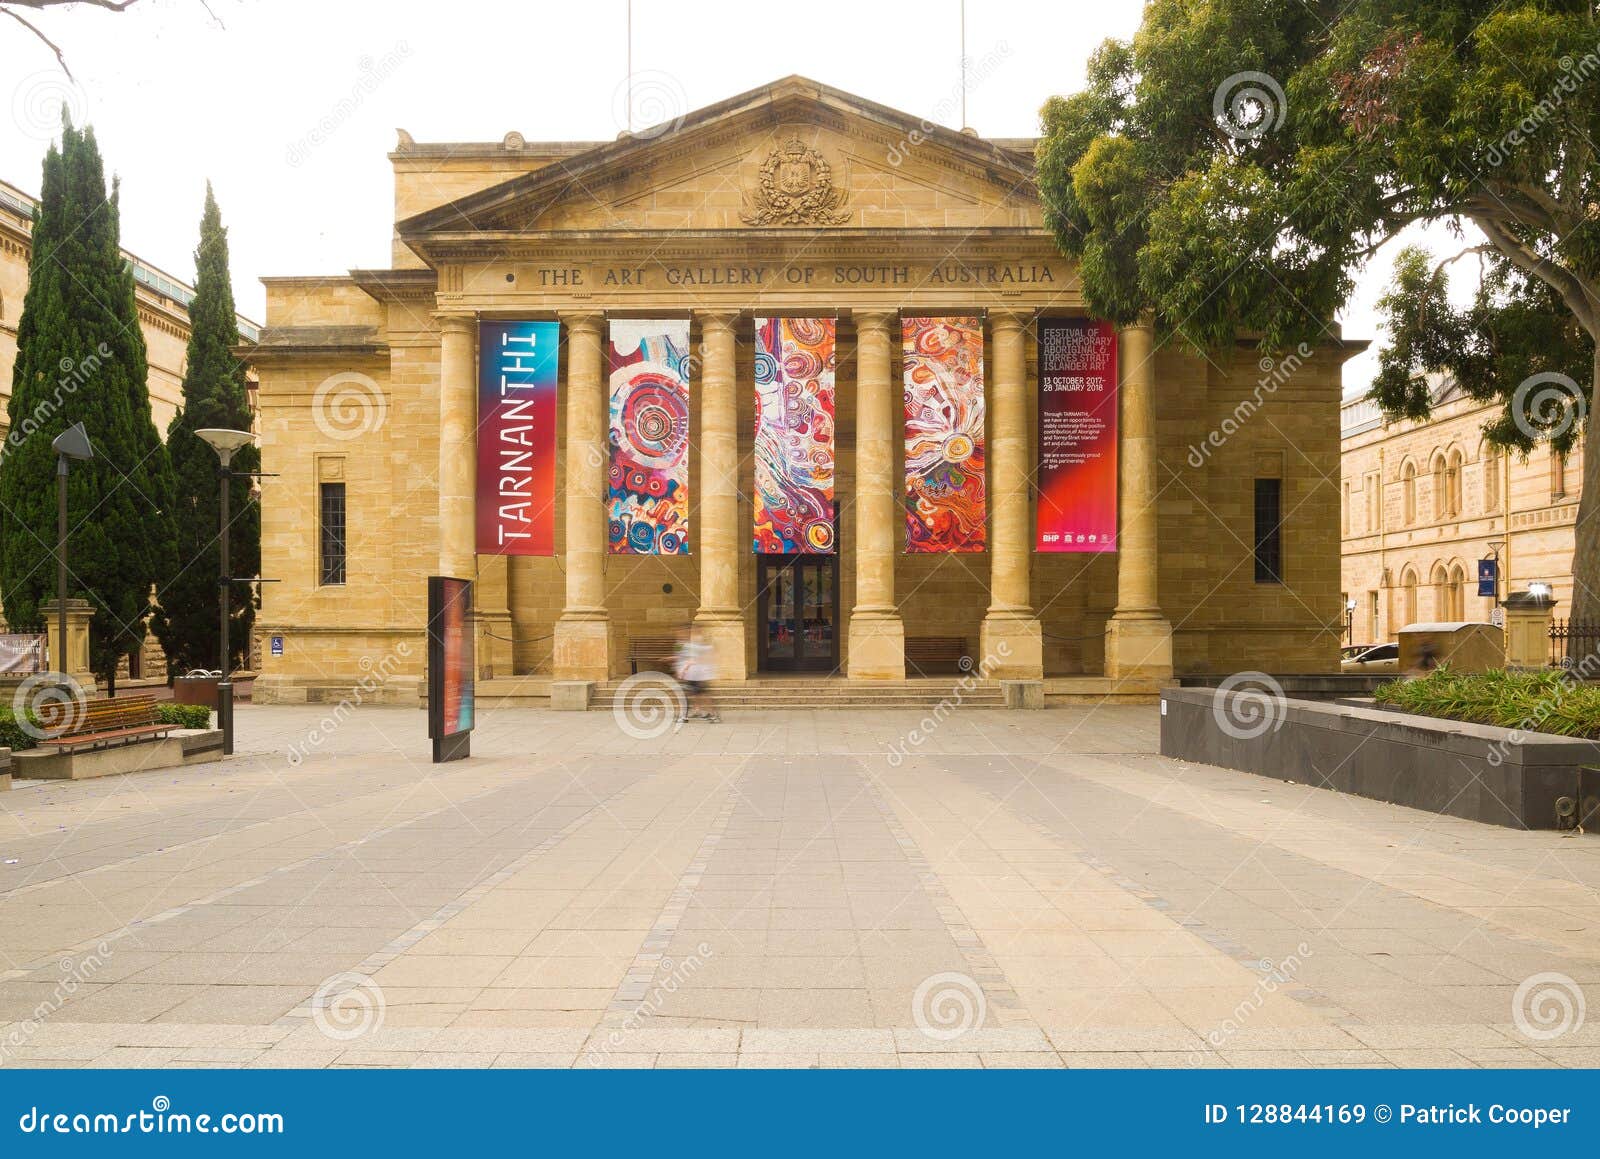 Art Gallery of South Australia, Australia Editorial Stock Image - Image